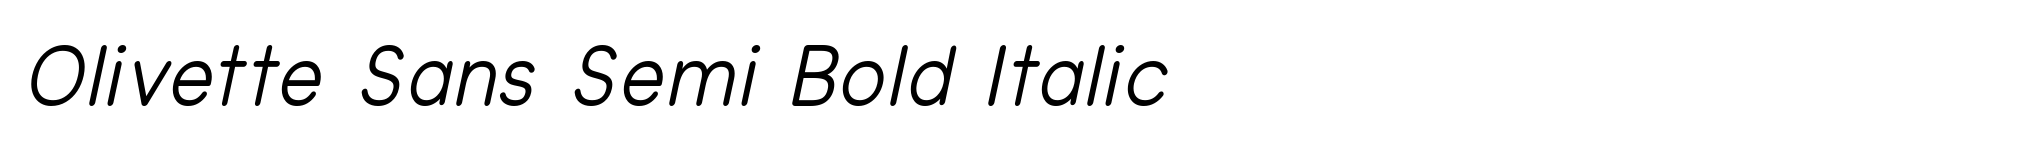 Olivette Sans Semi Bold Italic image